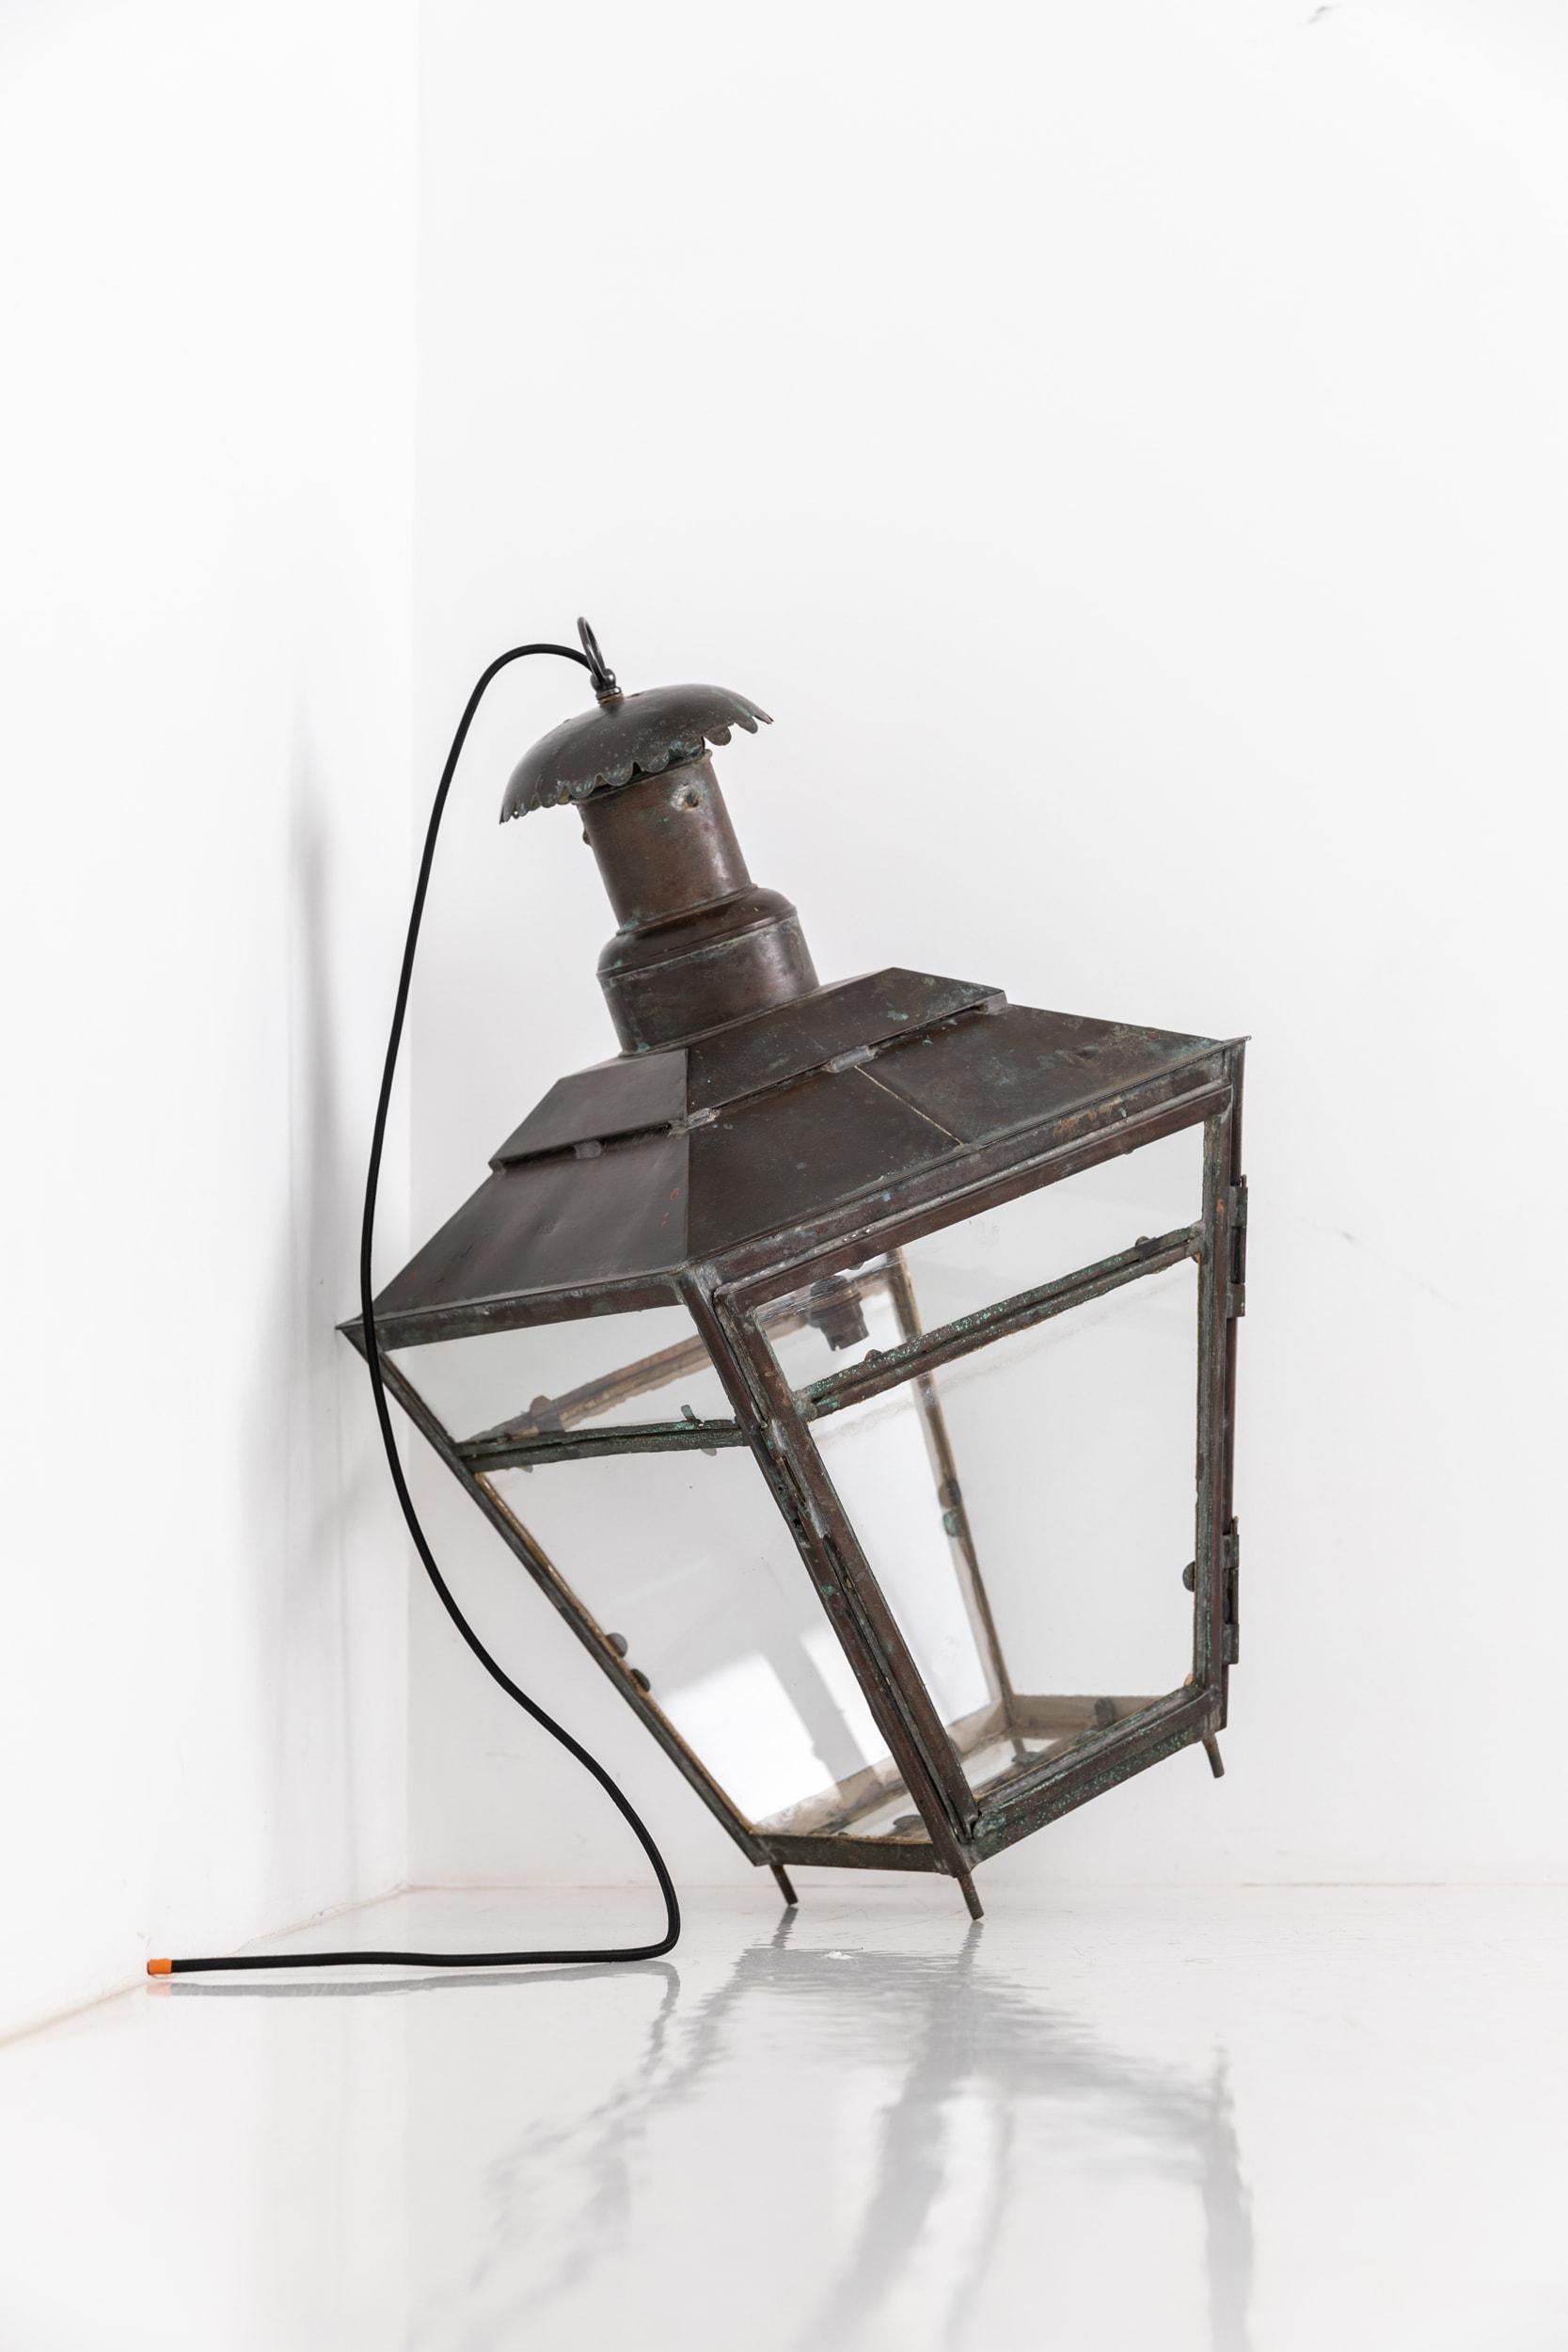 Antique Glazed Copper Railway L&NE Hall Lantern Pendant Light Lamp. C.1900 For Sale 1